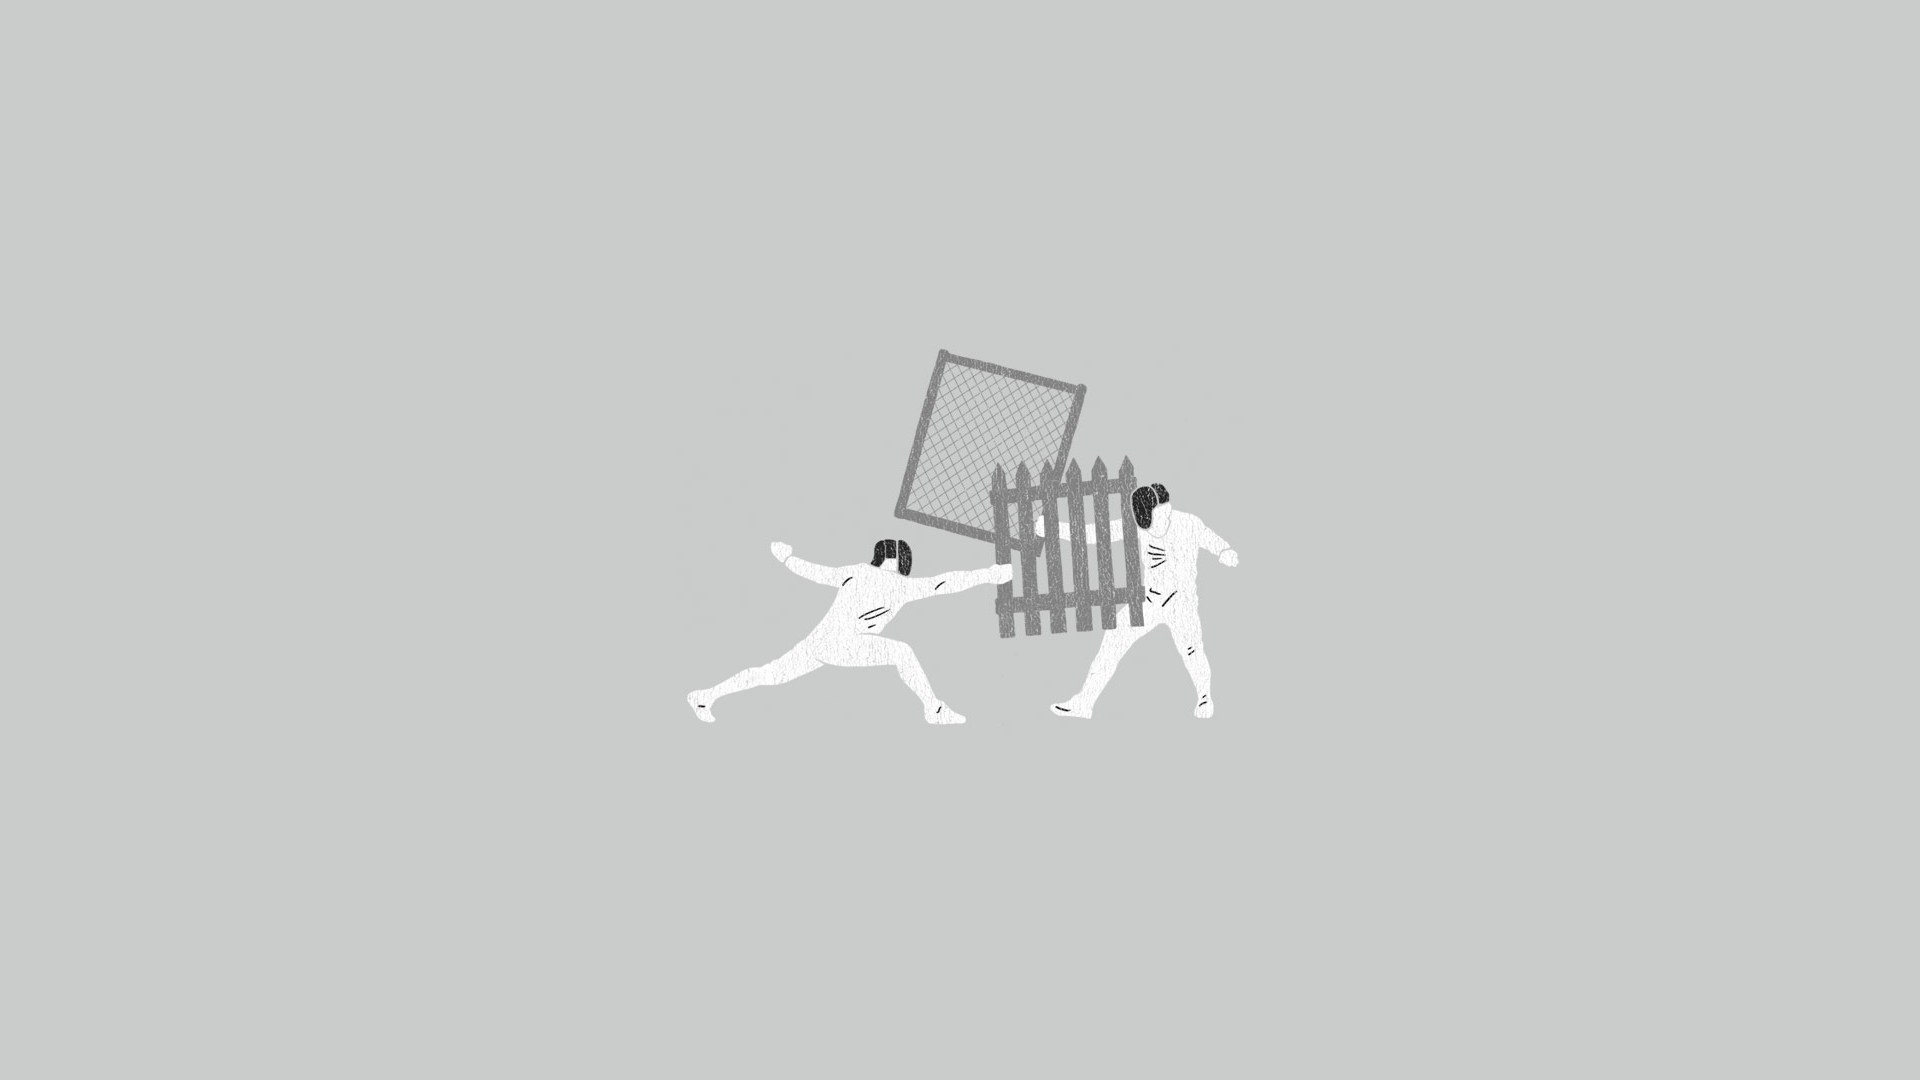 General 1920x1080 humor minimalism fencing (sport) fence